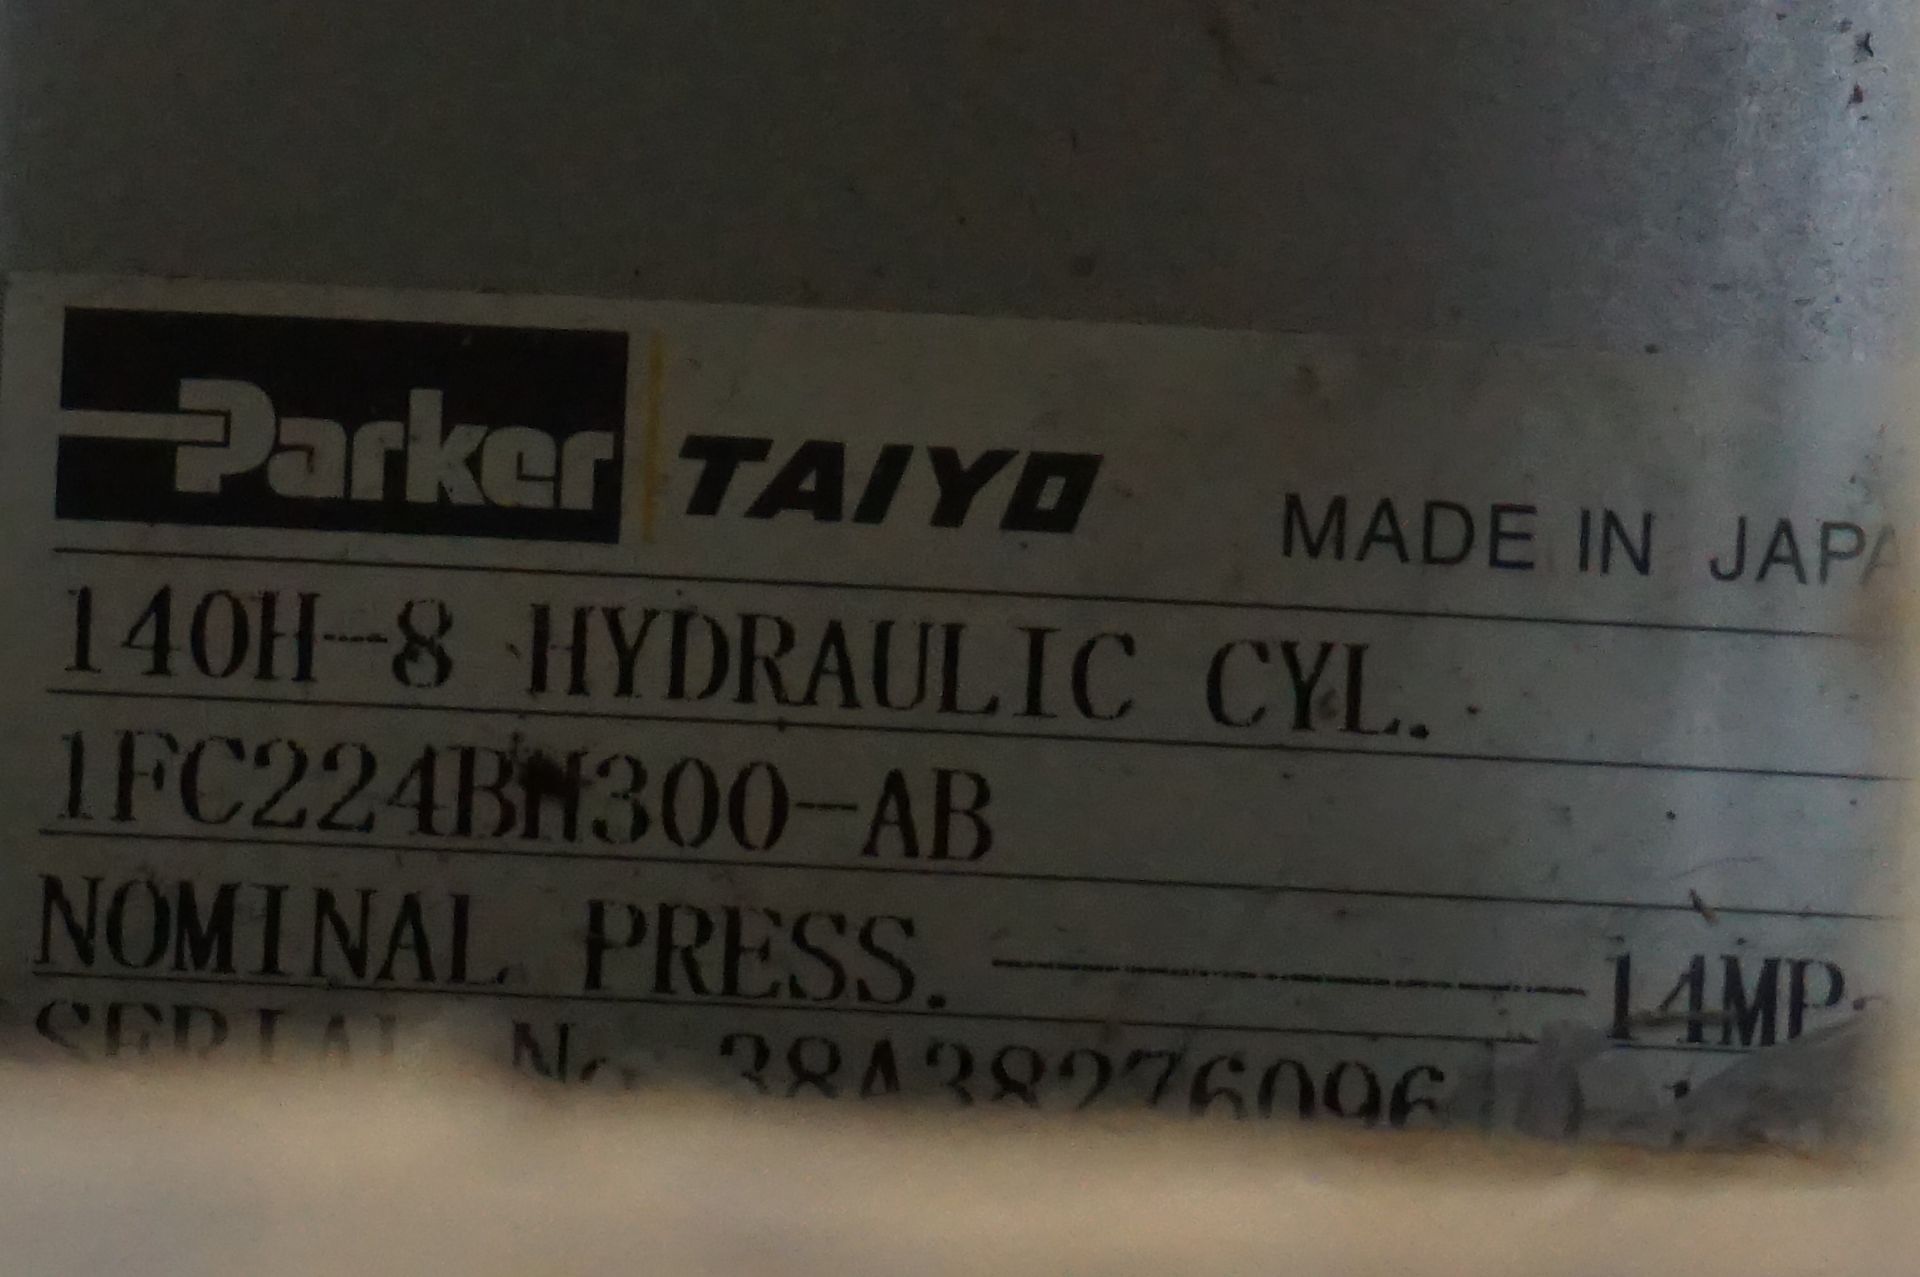 Parker Taiyo 140H-8 hydraulic nominal press - Image 2 of 3